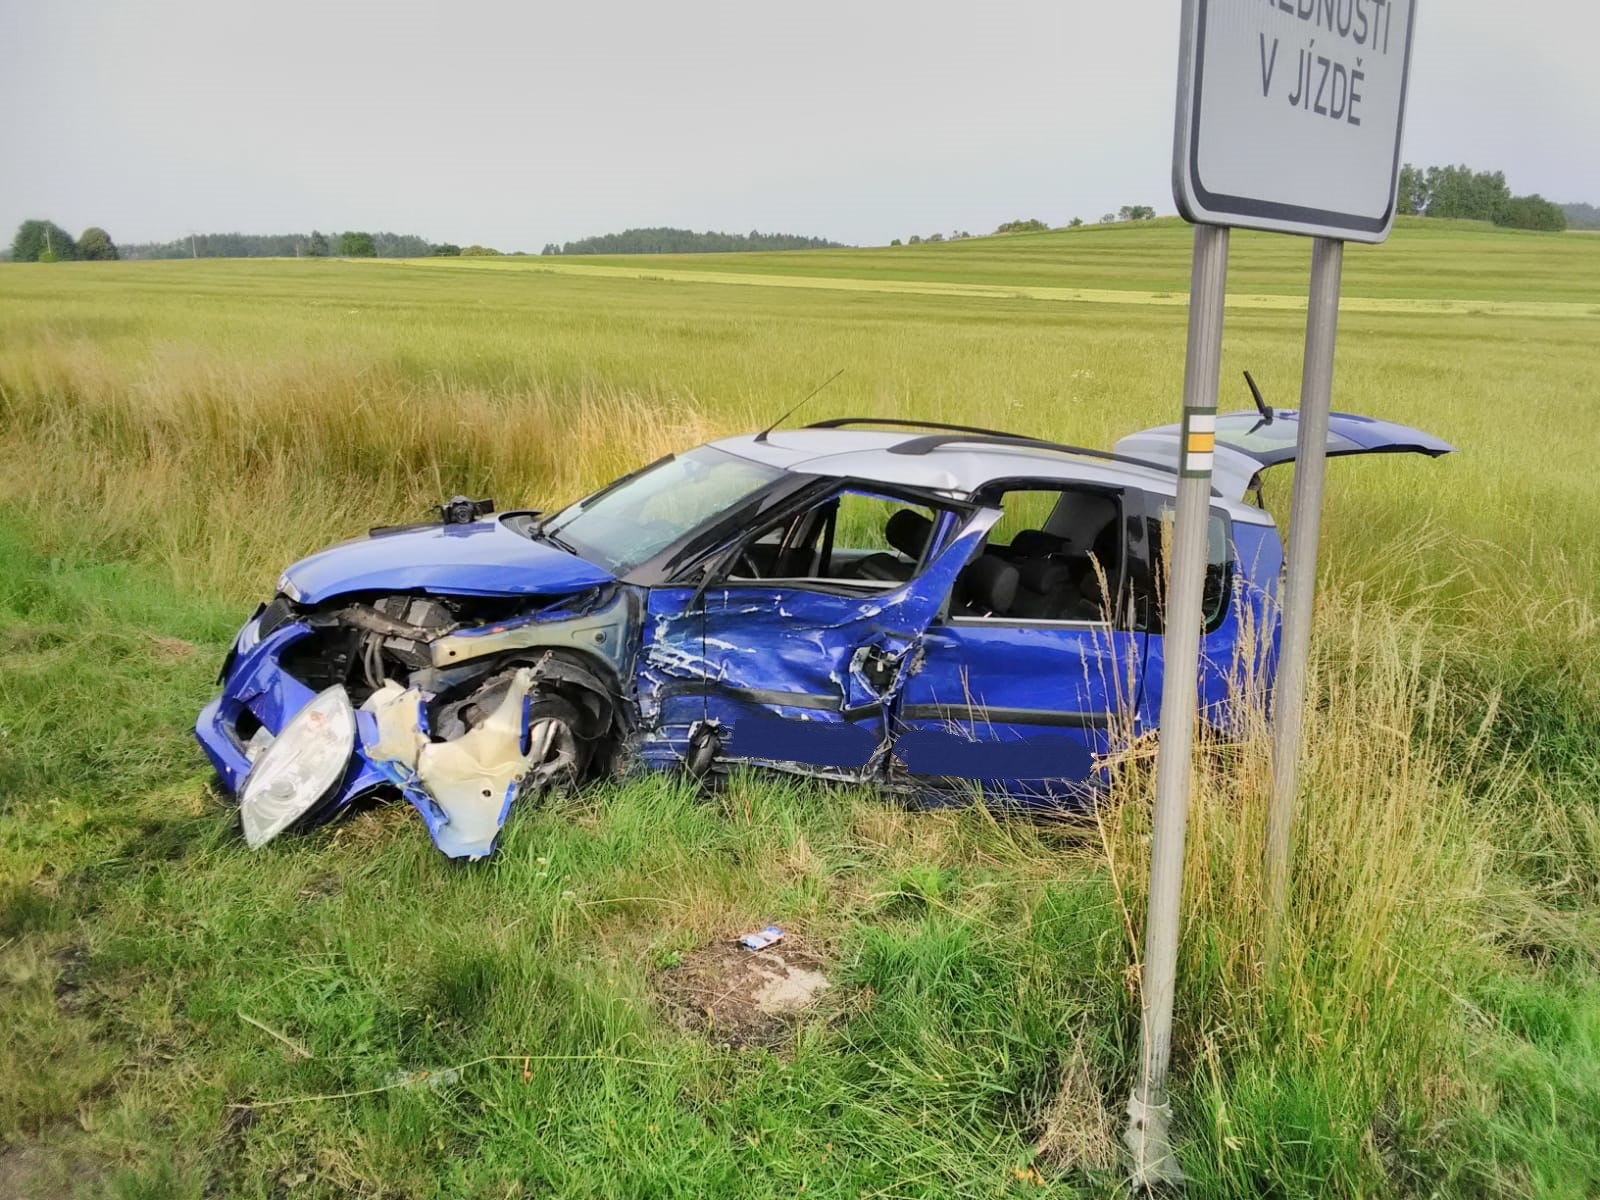 Dopravní nehoda 2 OA, Strmilov - 13. 7. 2021 (3).jpg